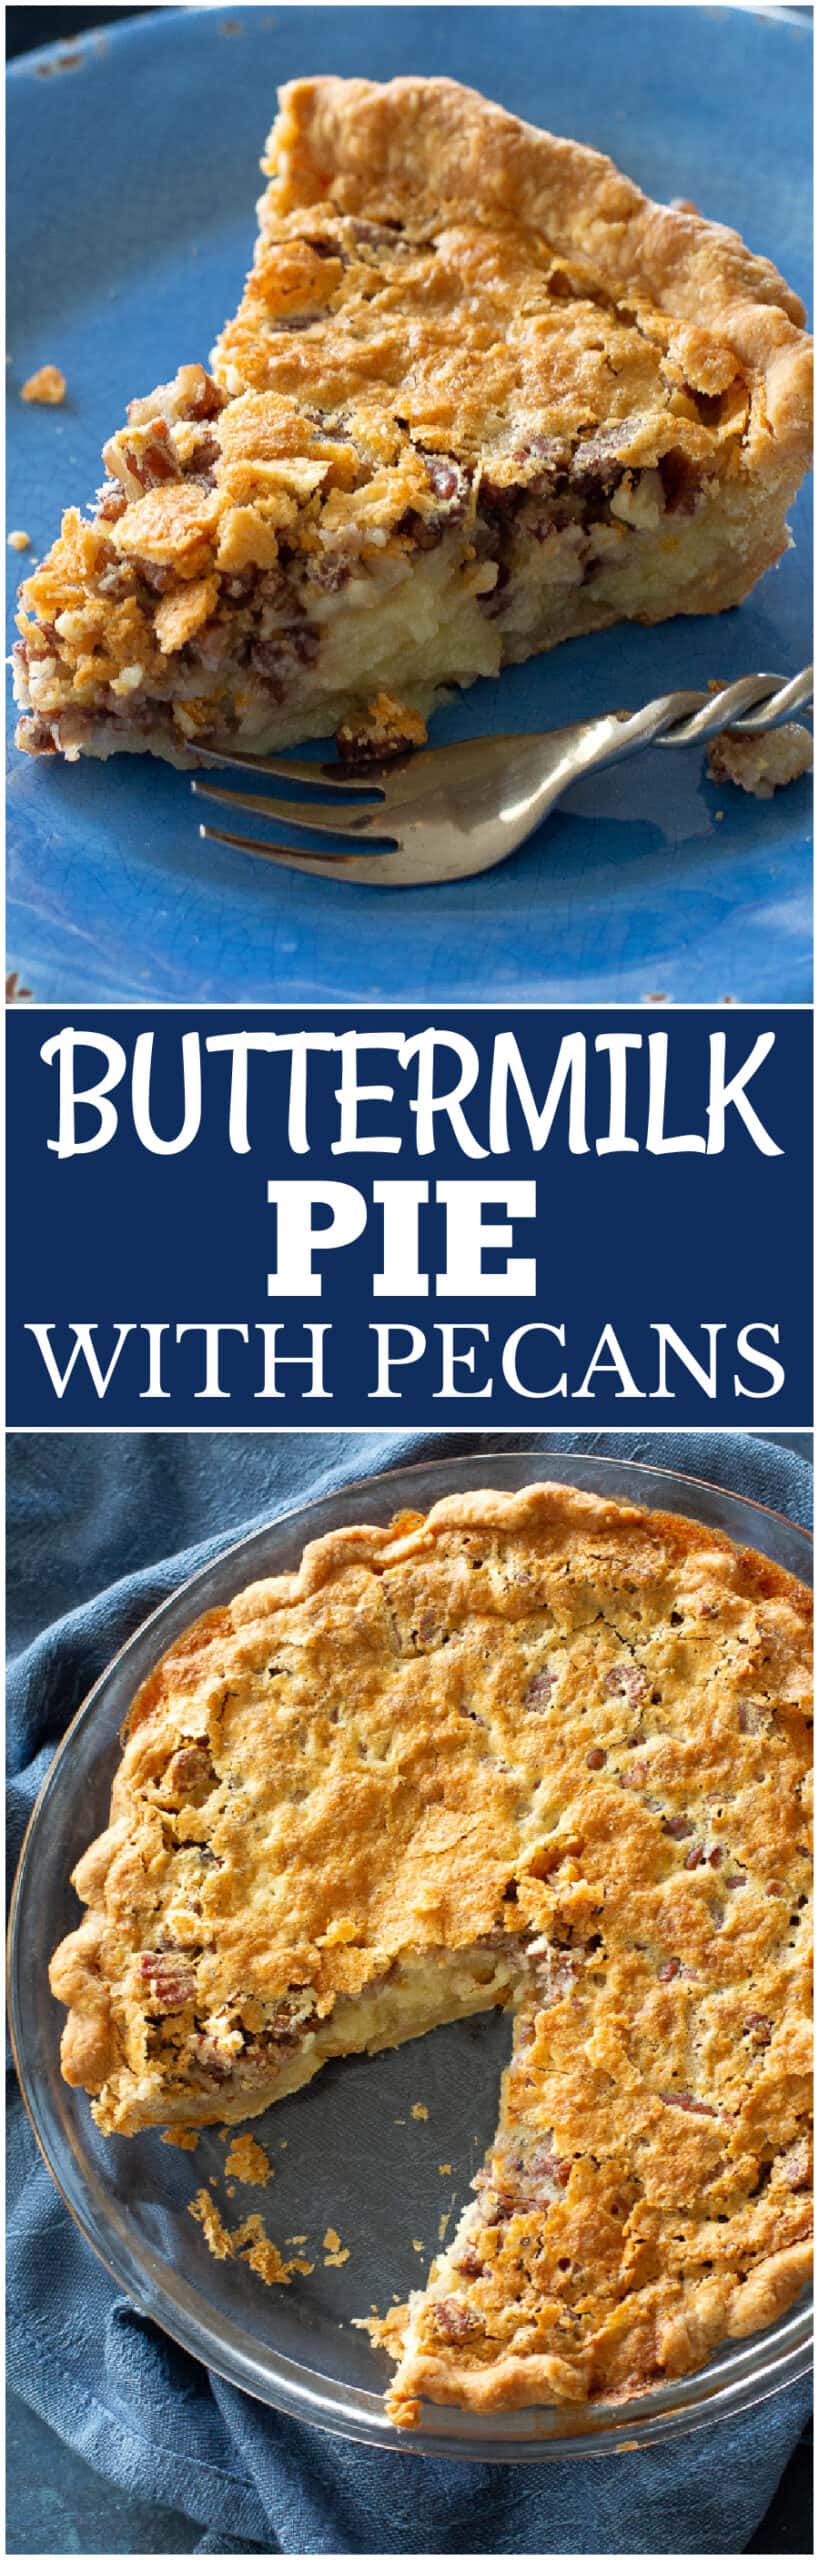 buttermilk pie with pecans scaled - Buttermilk Pie with Pecans